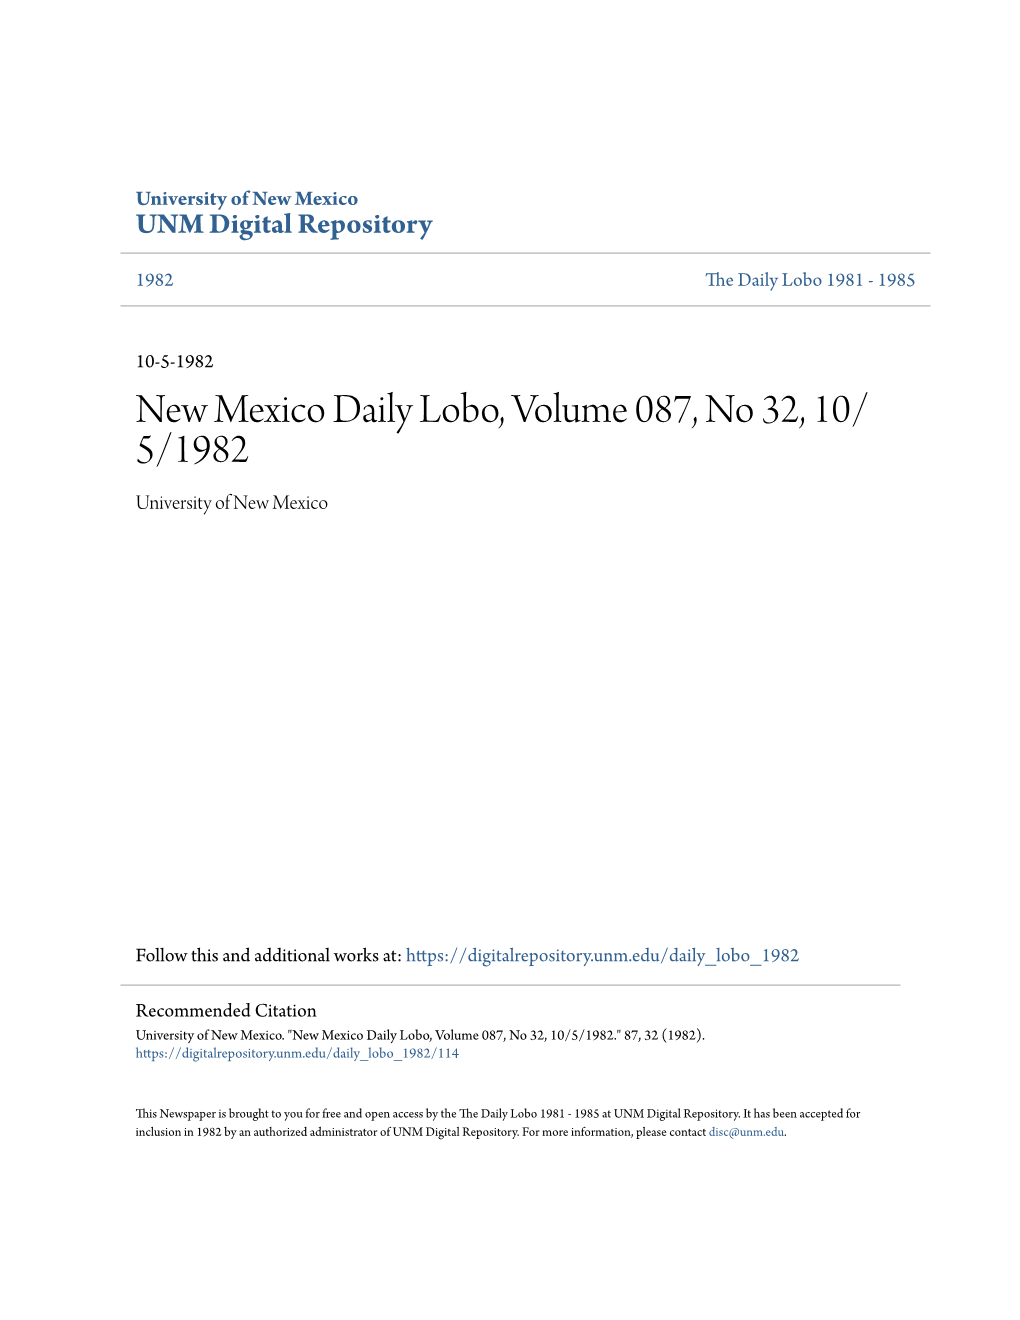 New Mexico Daily Lobo, Volume 087, No 32, 10/5/1982." 87, 32 (1982)